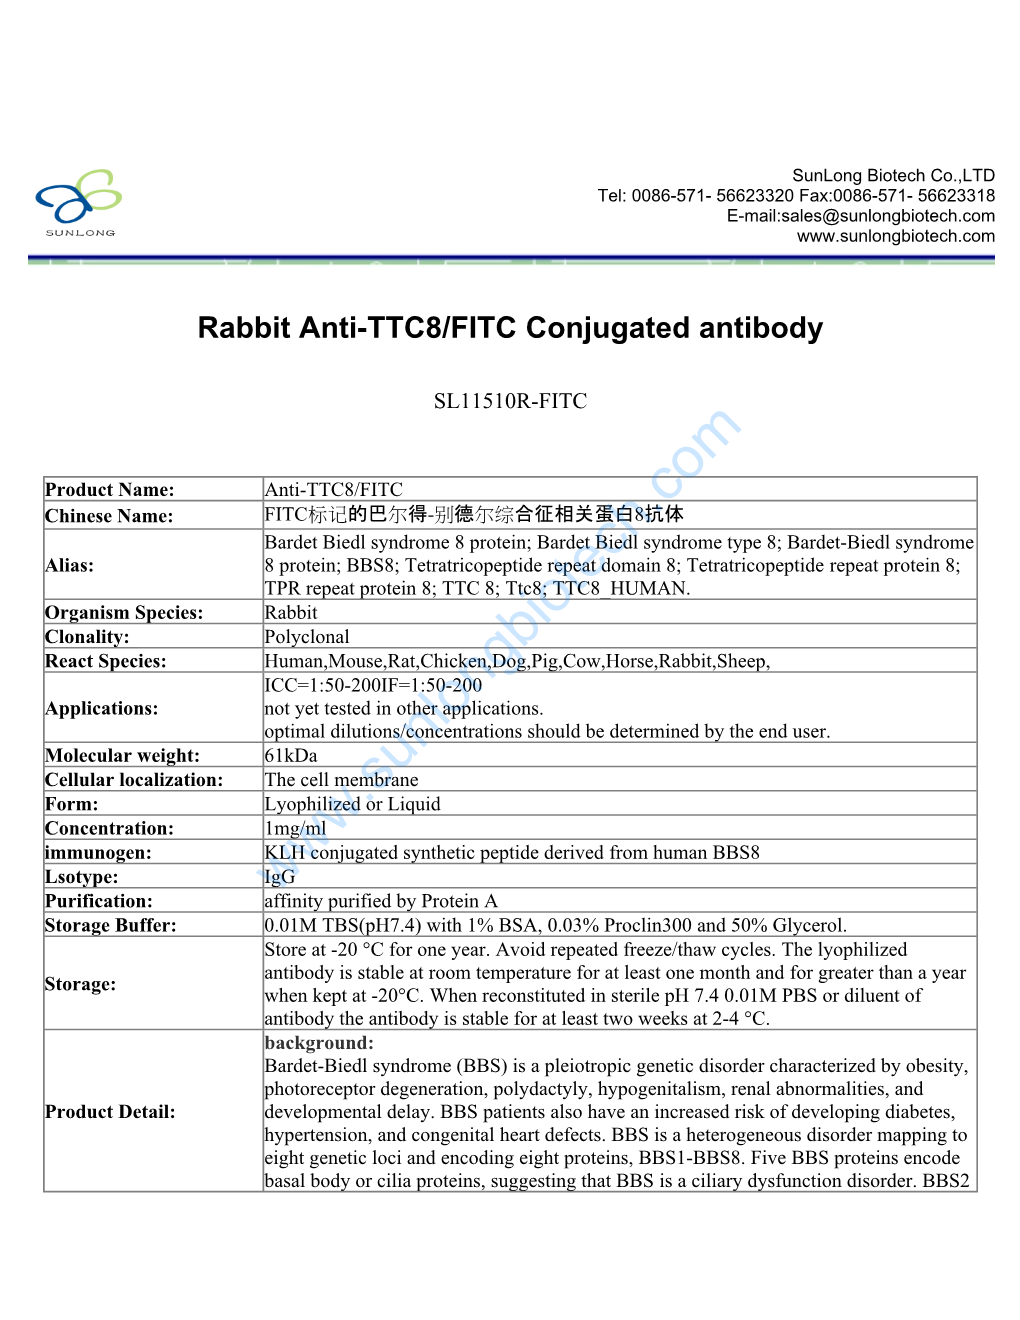 Rabbit Anti-TTC8/FITC Conjugated Antibody-SL11510R-FITC